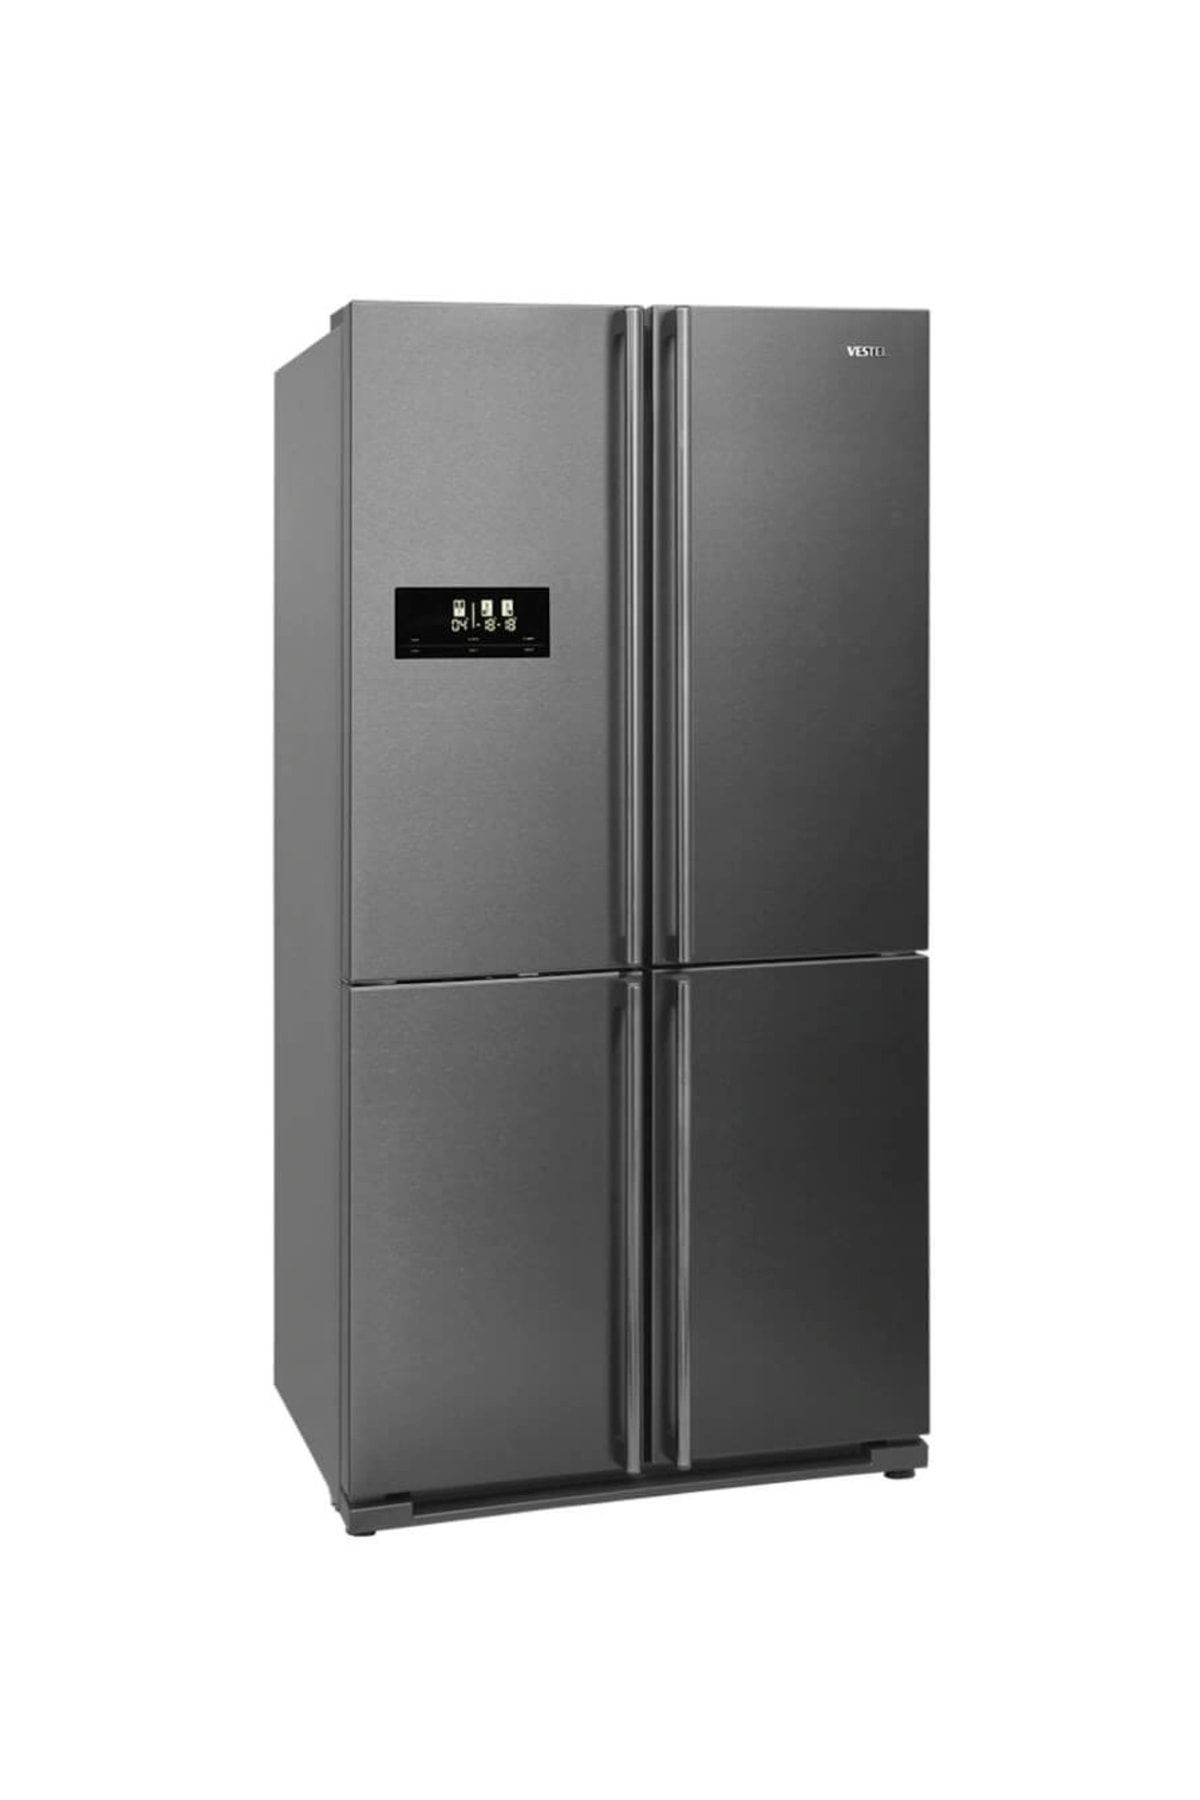 VESTEL Akıllı Nf645 X A+ No-frost Gardırop Tipi French Door Buzdolabı